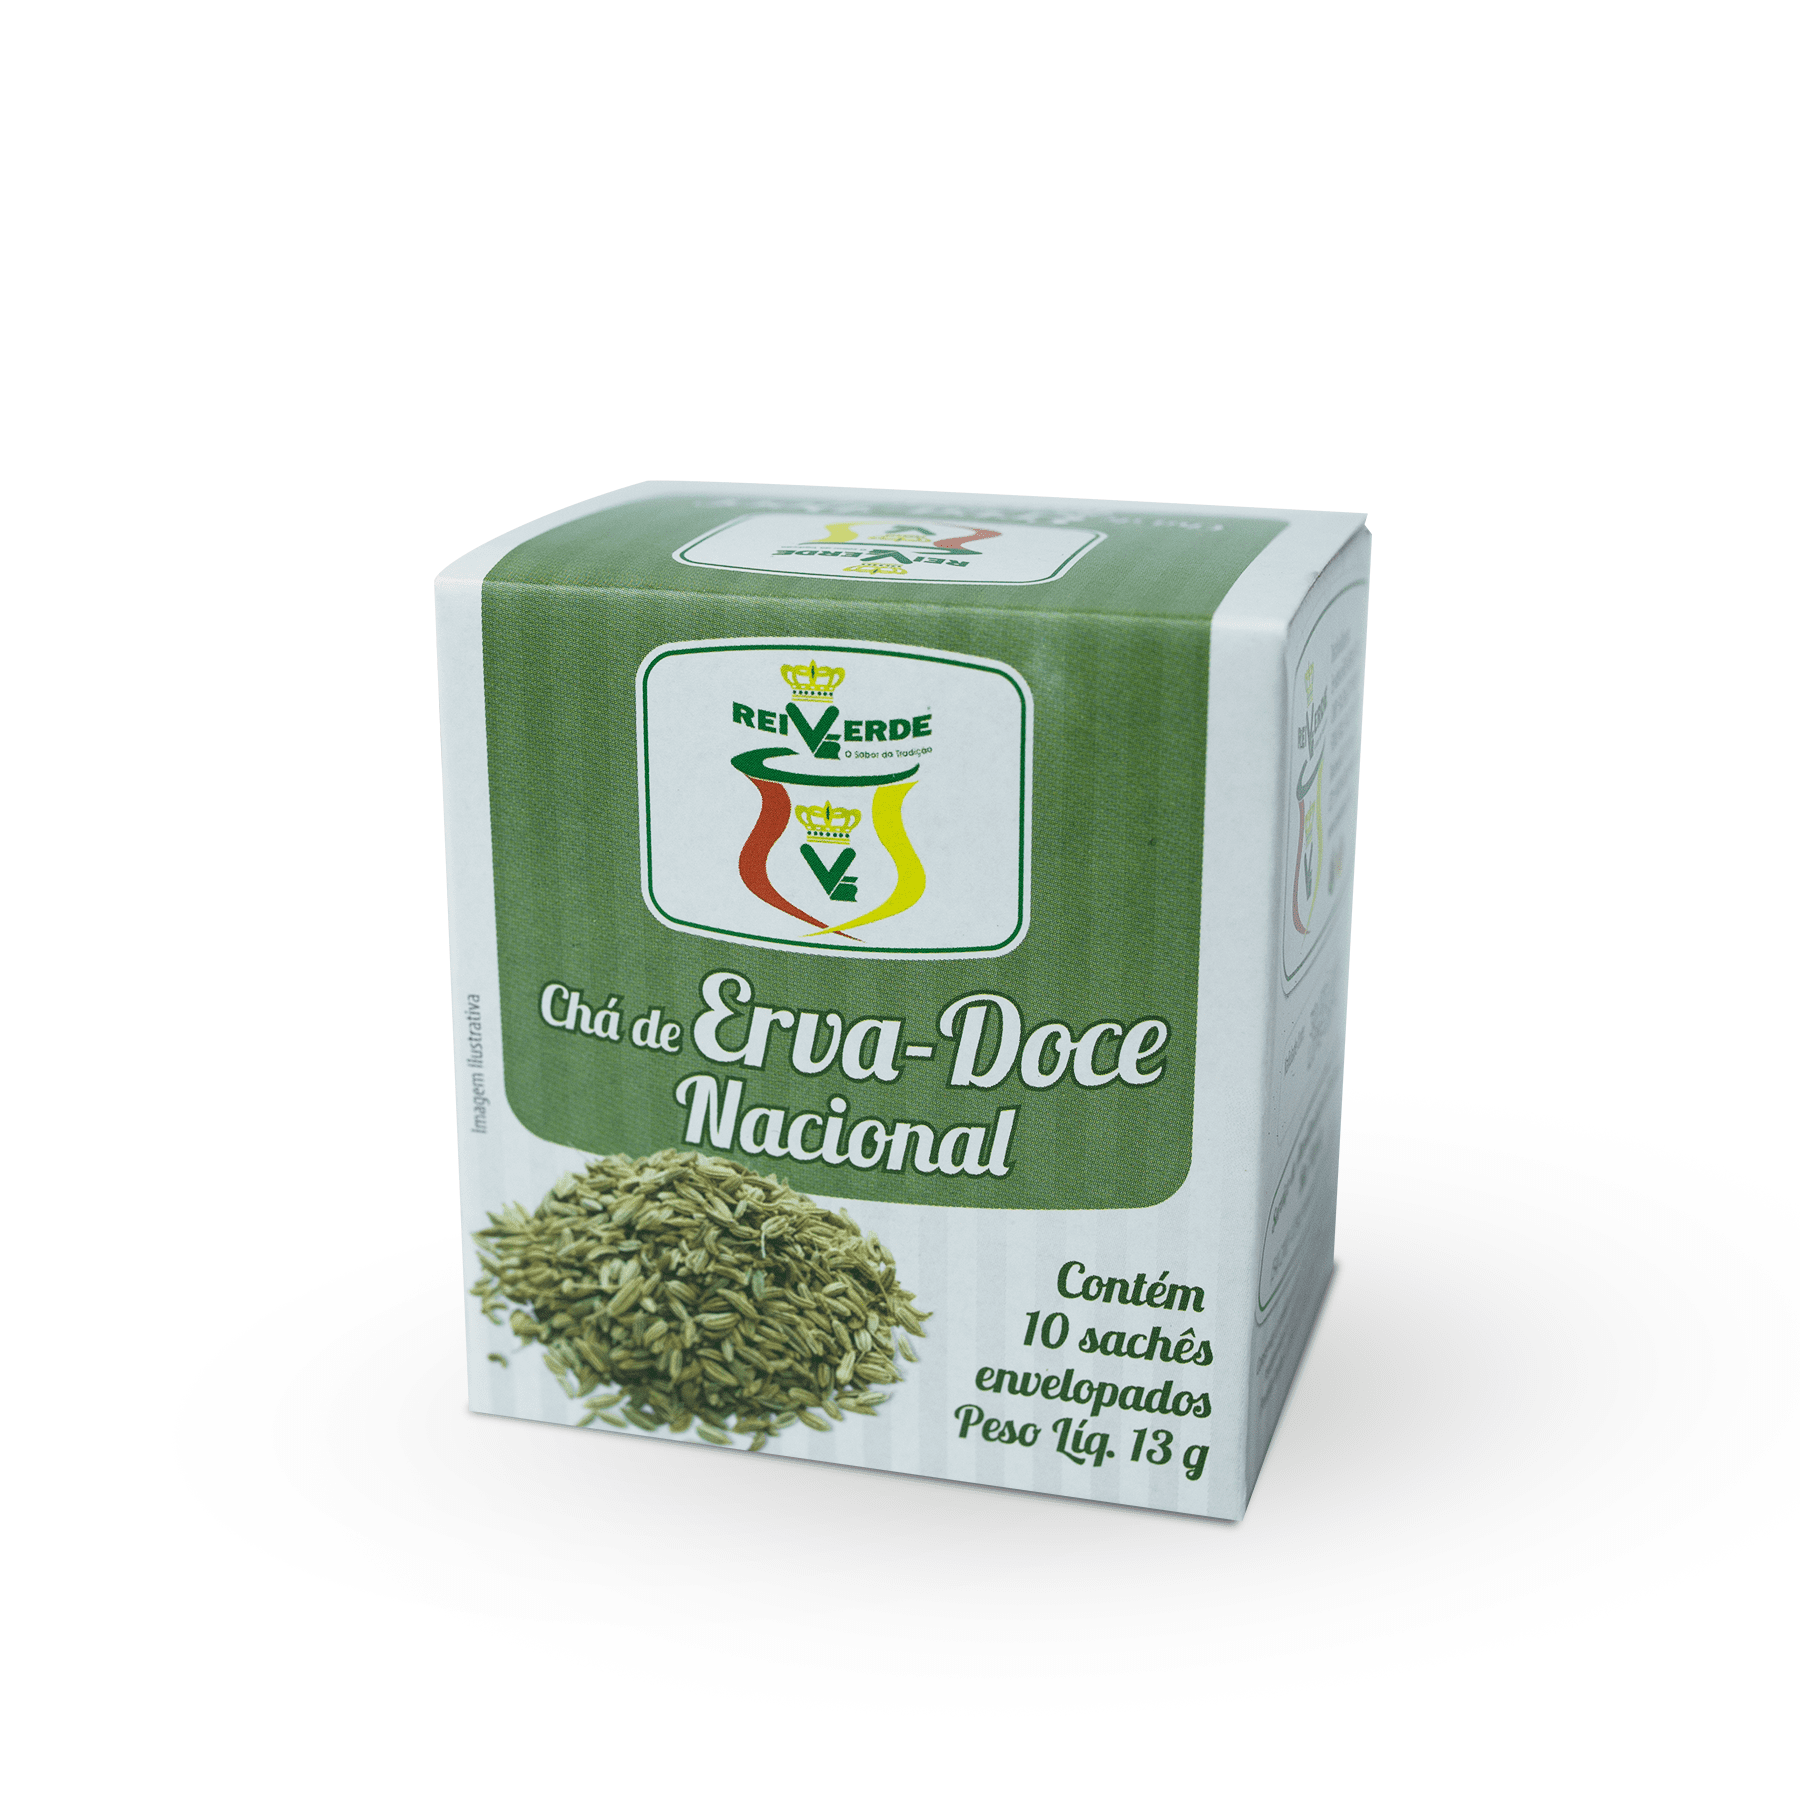 Chá de Erva-Doce Nacional